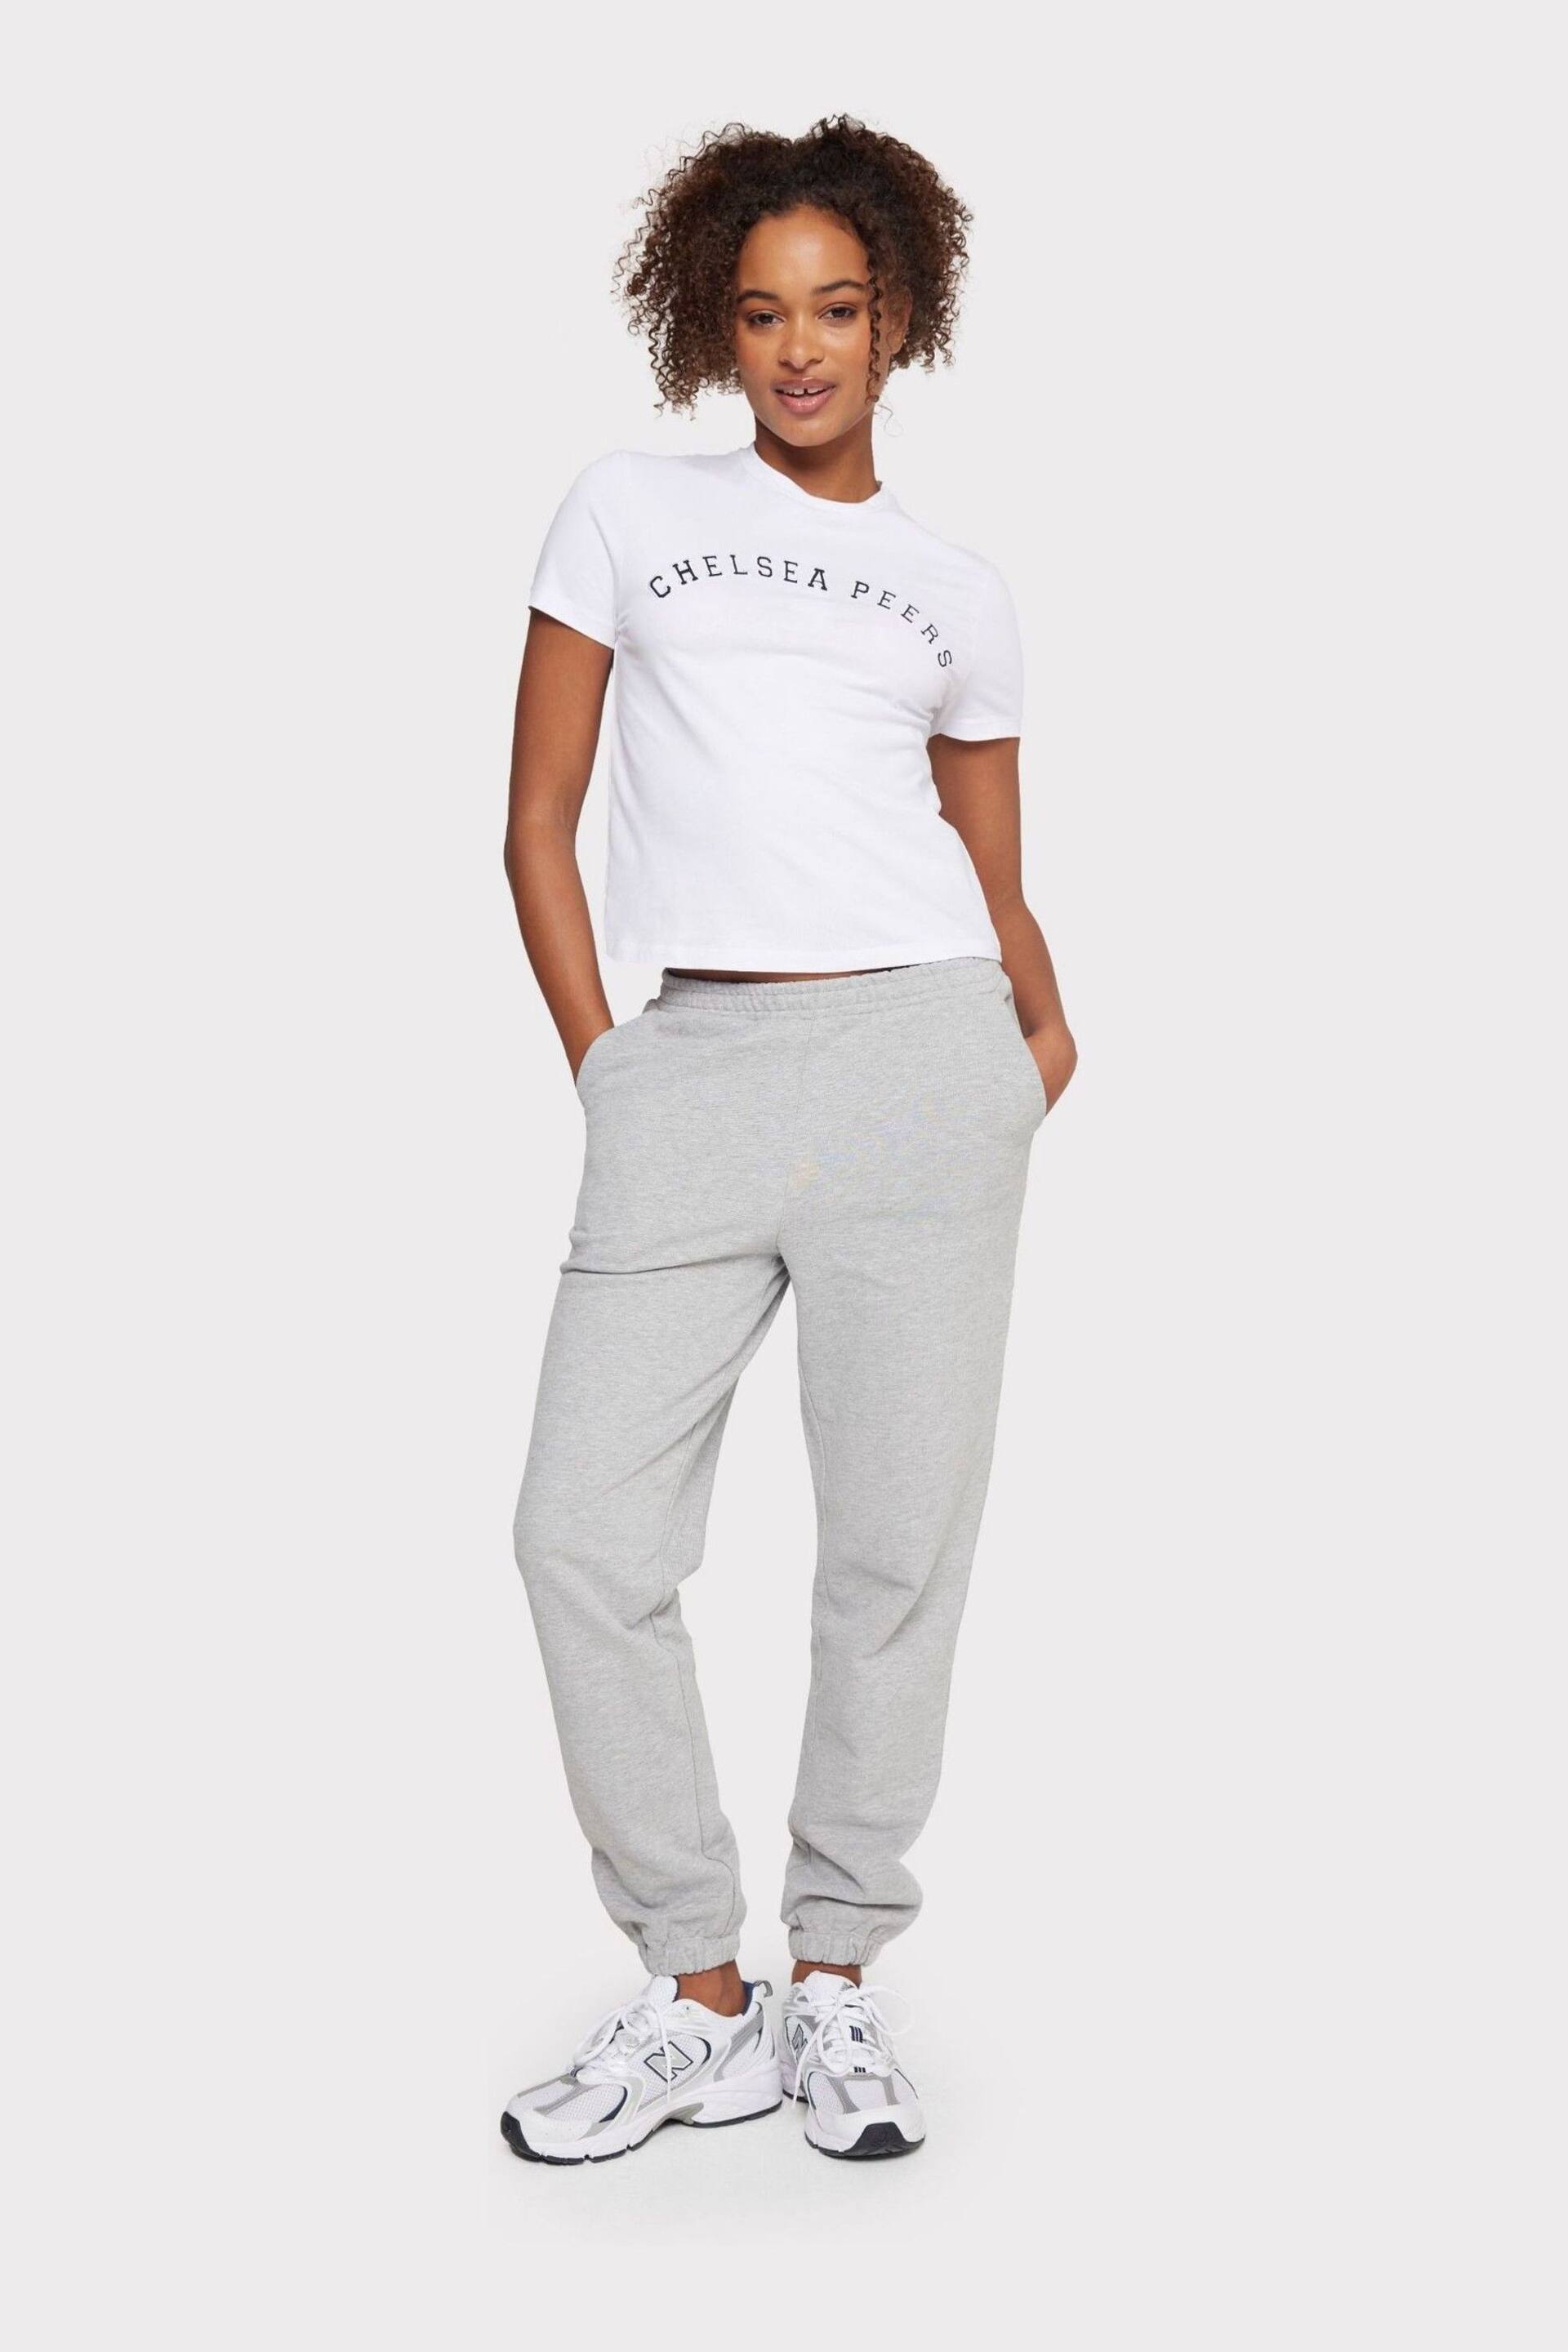 Chelsea Peers White Organic Cotton Logo Crop T-Shirt - Image 3 of 5